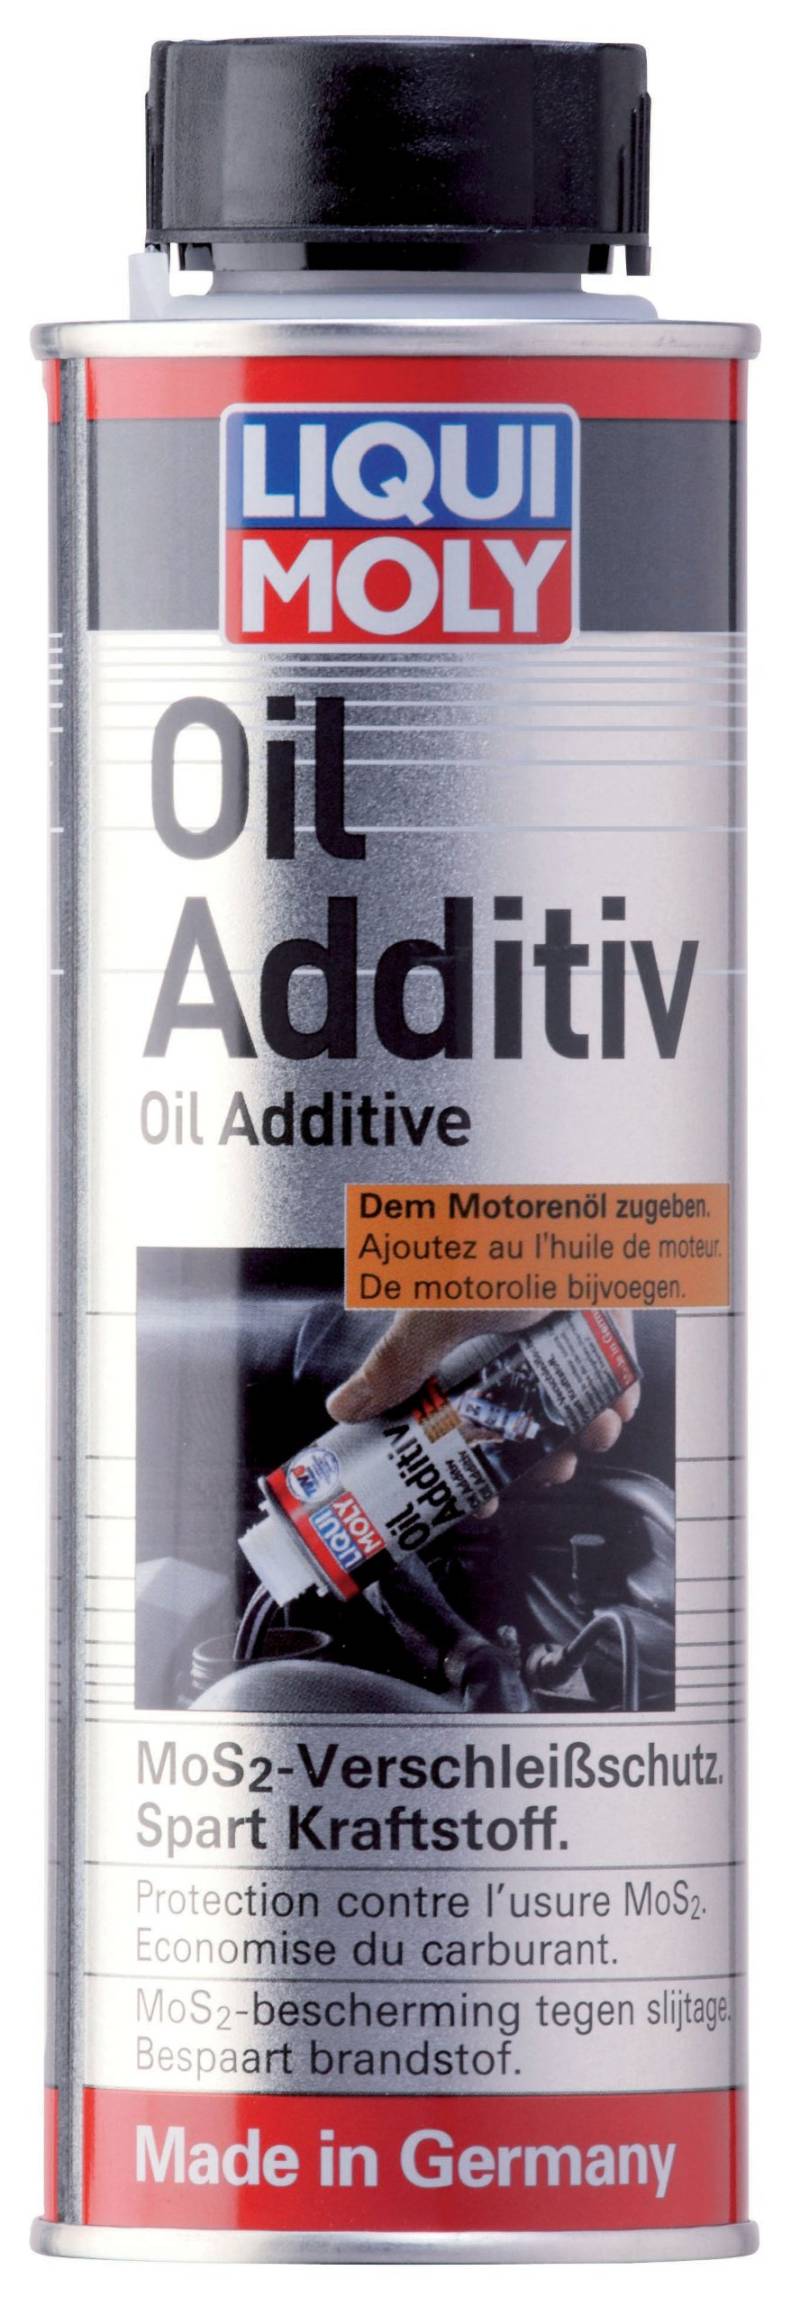 LIQUI MOLY Oil Additiv | 200 ml | Öladditiv | Art.-Nr.: 1012 von Liqui Moly